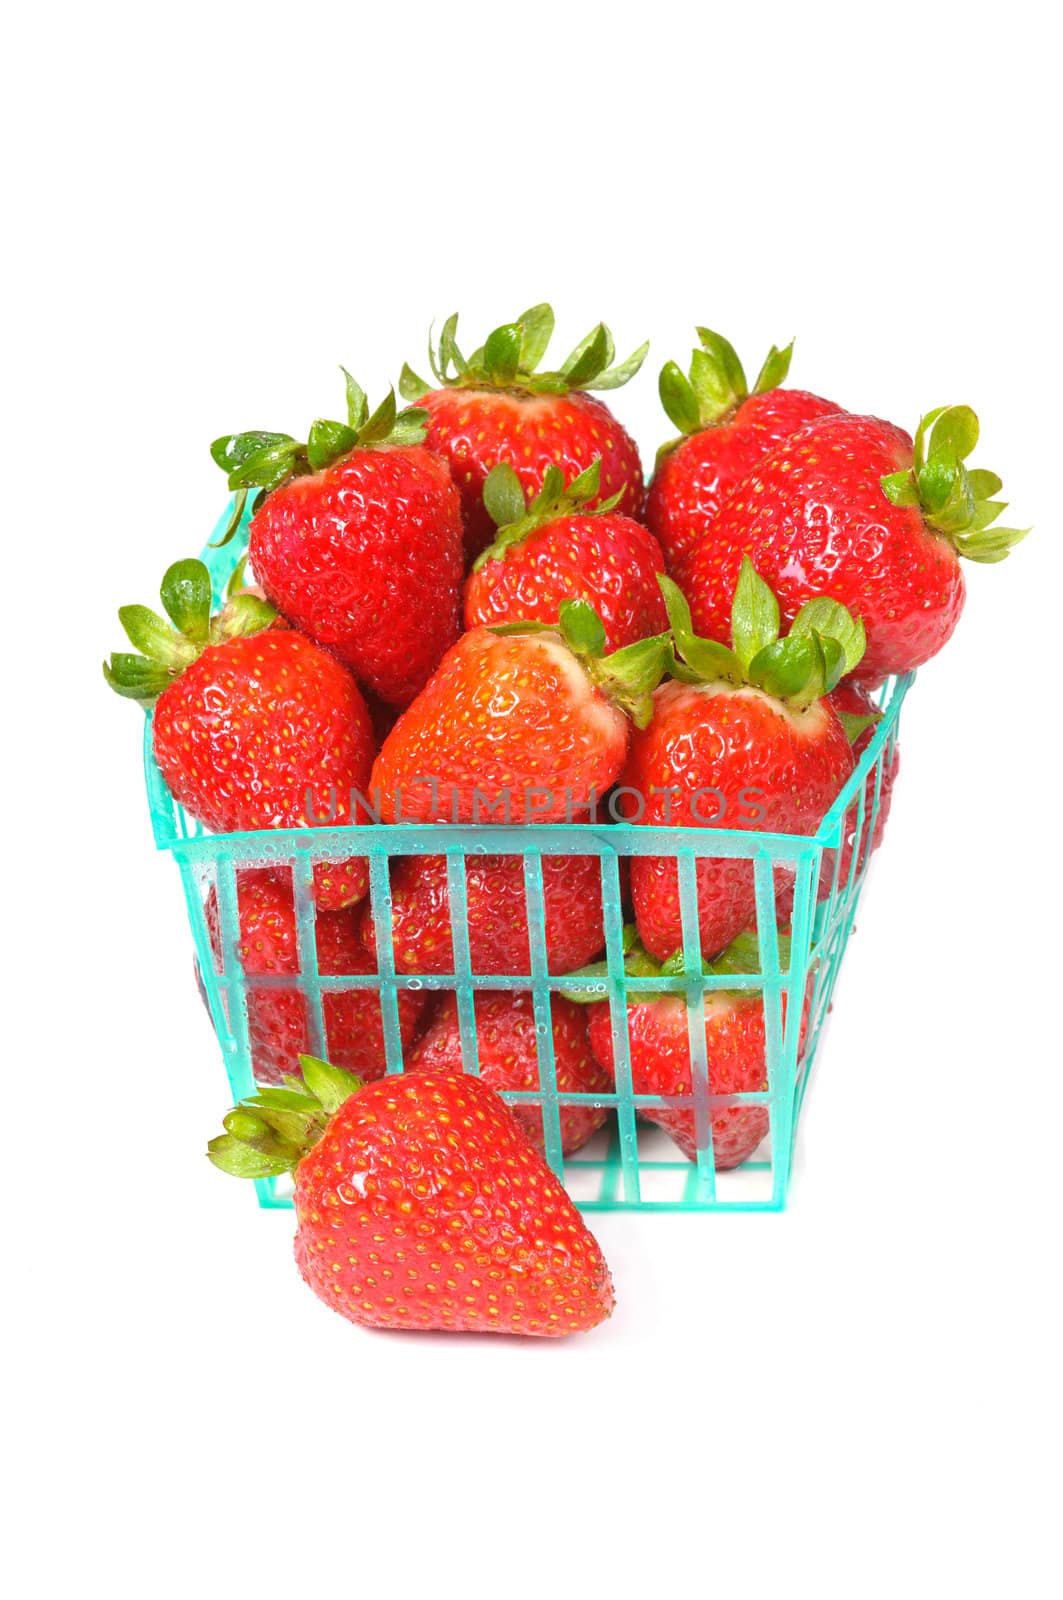 Strawberries in a basket by jeffbanke